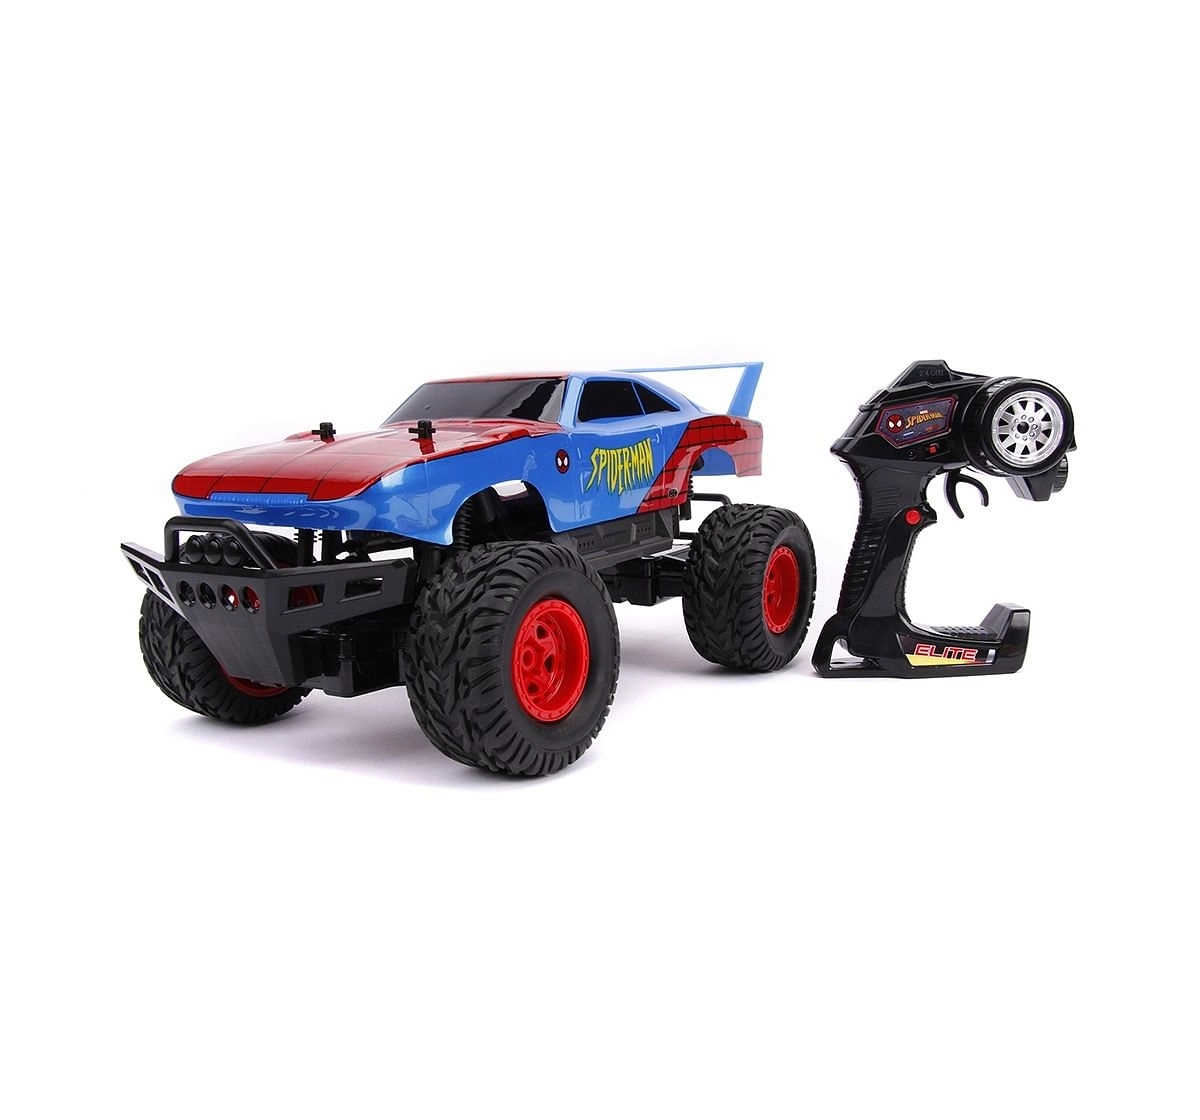 Jada Marvel Spider-Man RC Daytona 1:12 Remote Control Toys for Kids age 8Y+ 